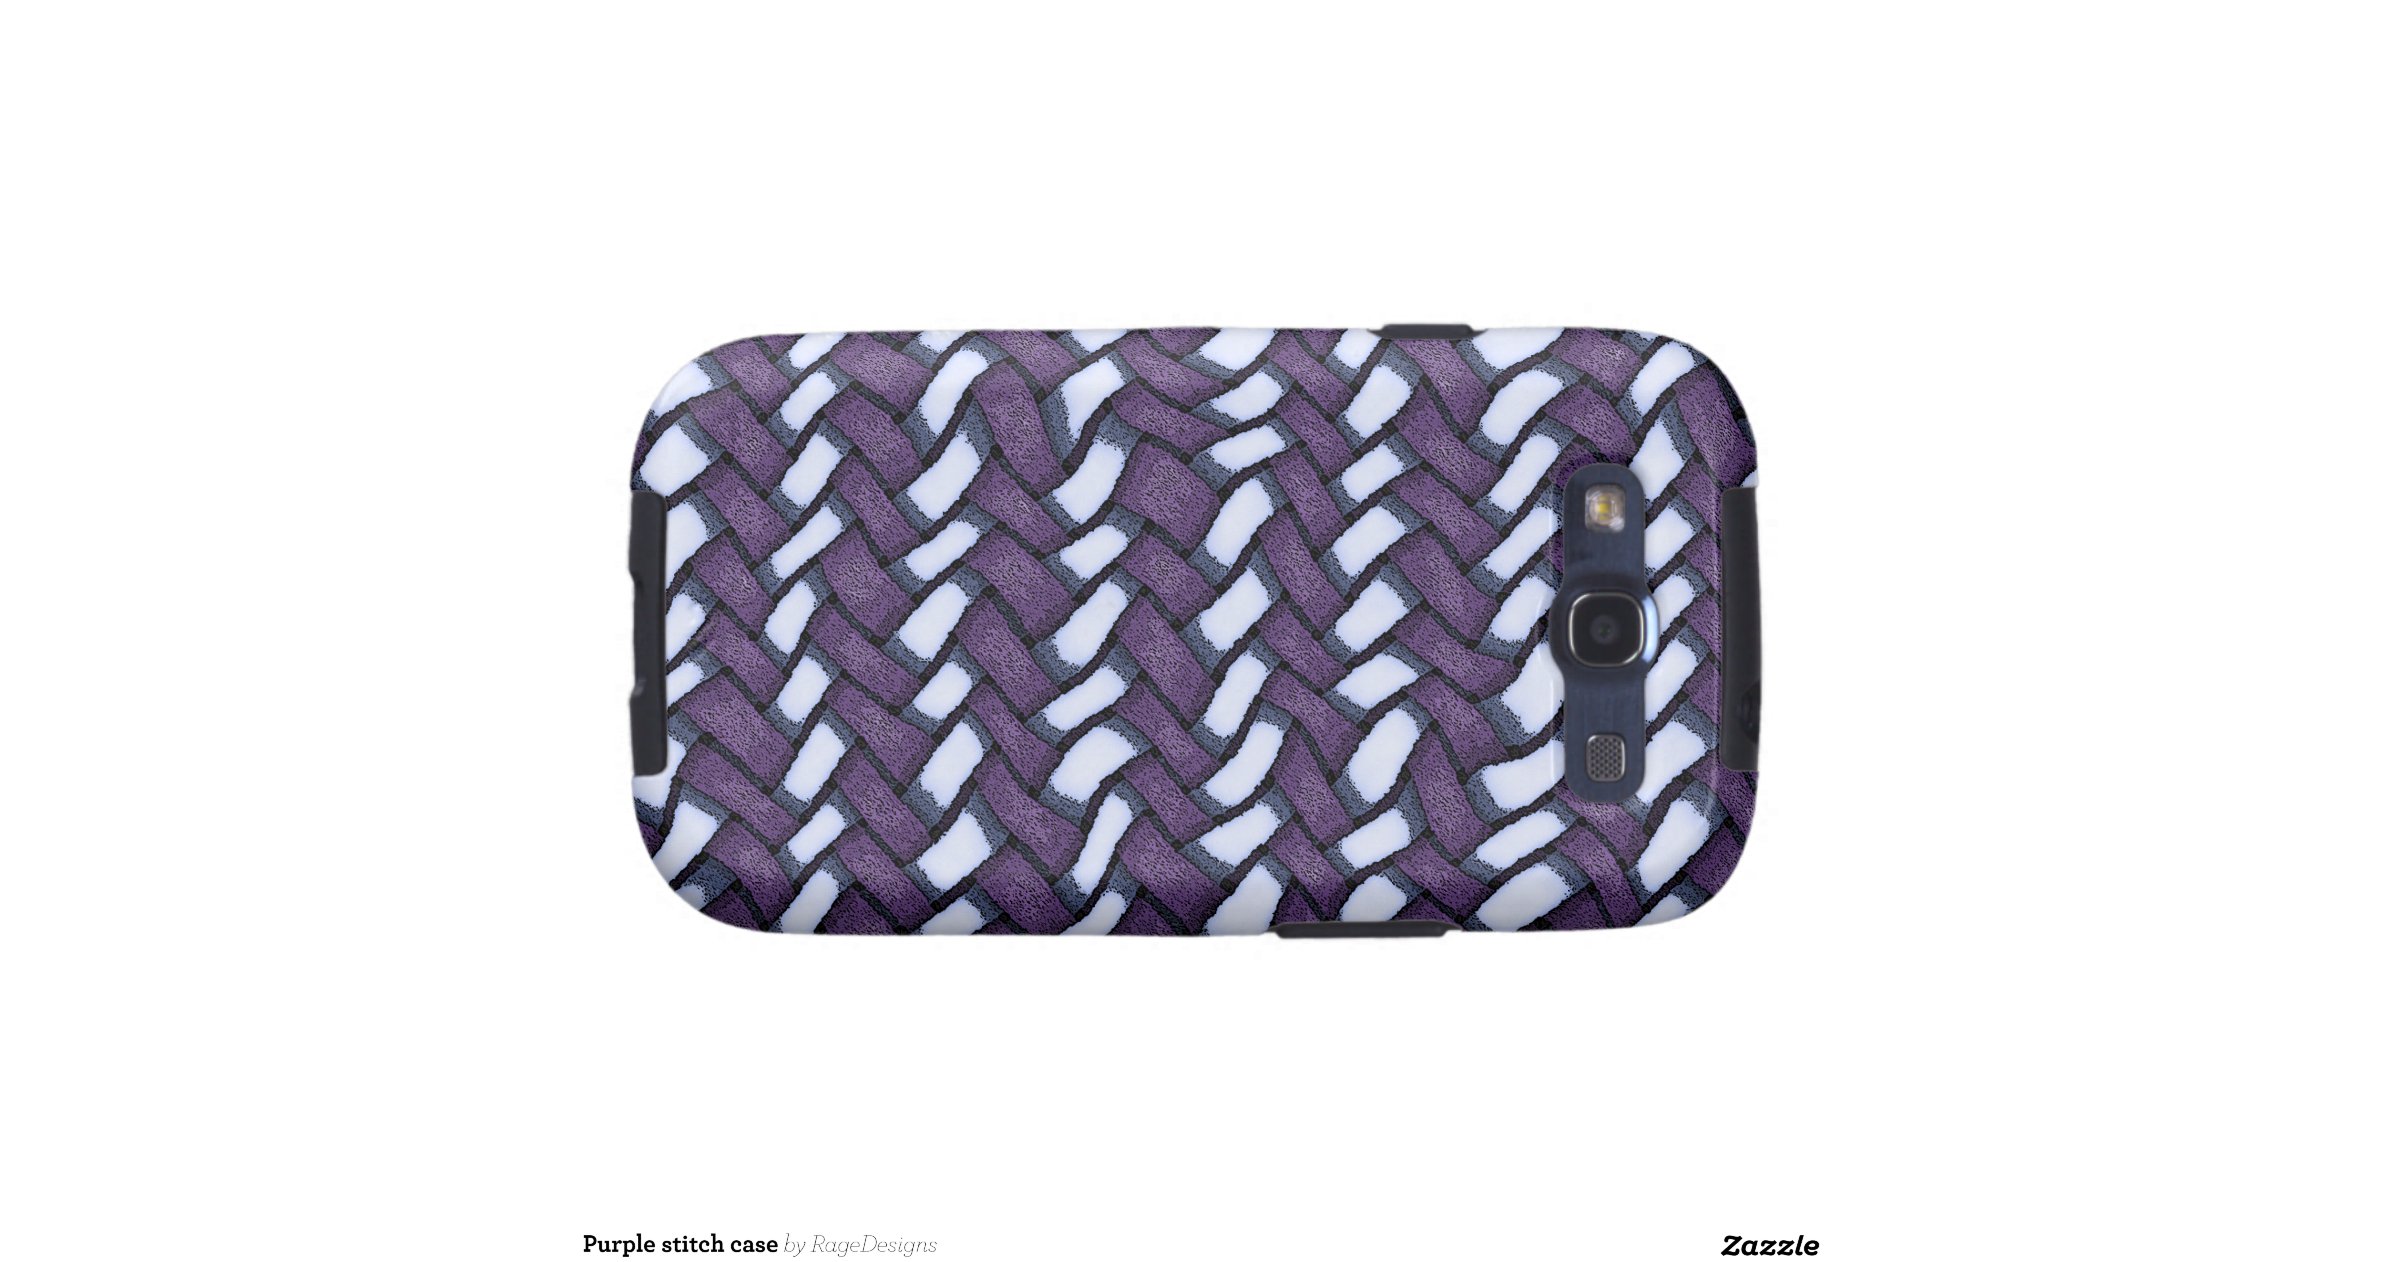 Purple stitch case galaxy SIII covers | Zazzle